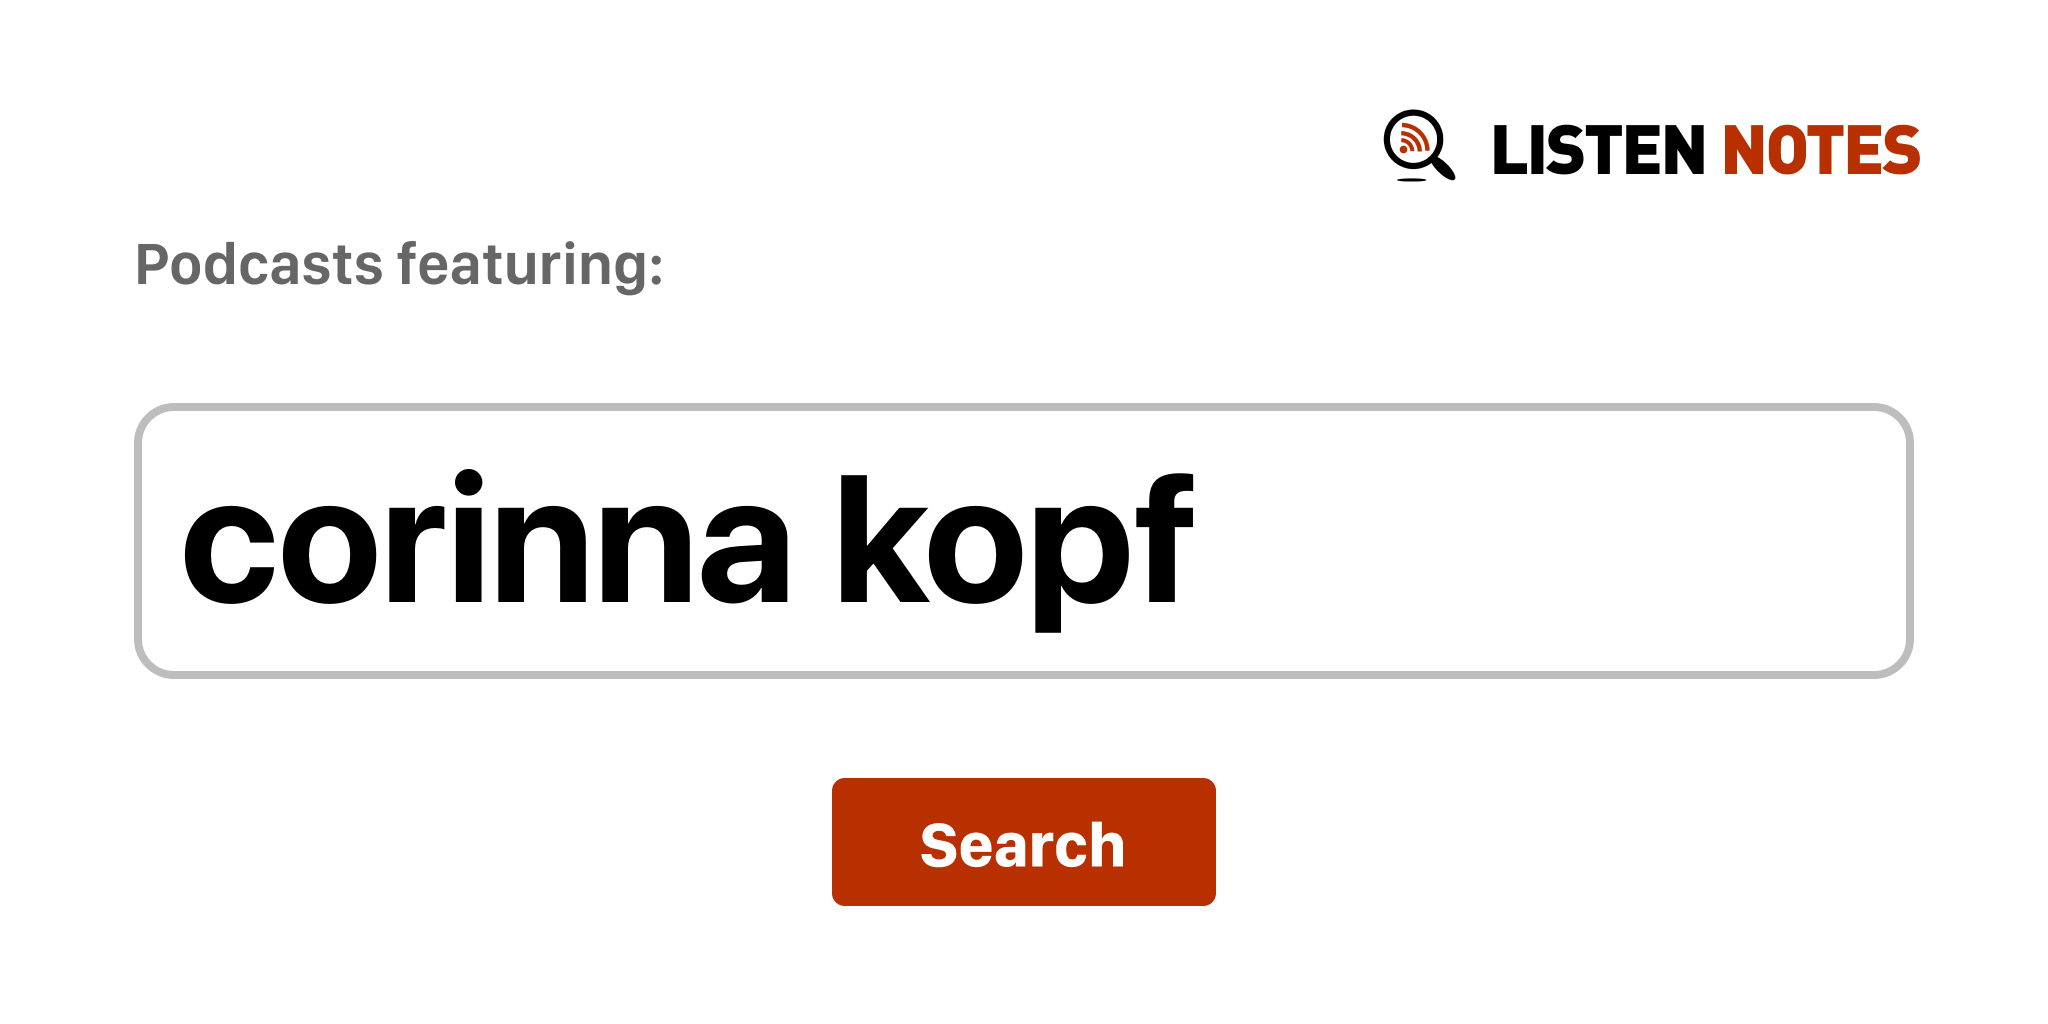 Corinna kopf exposed